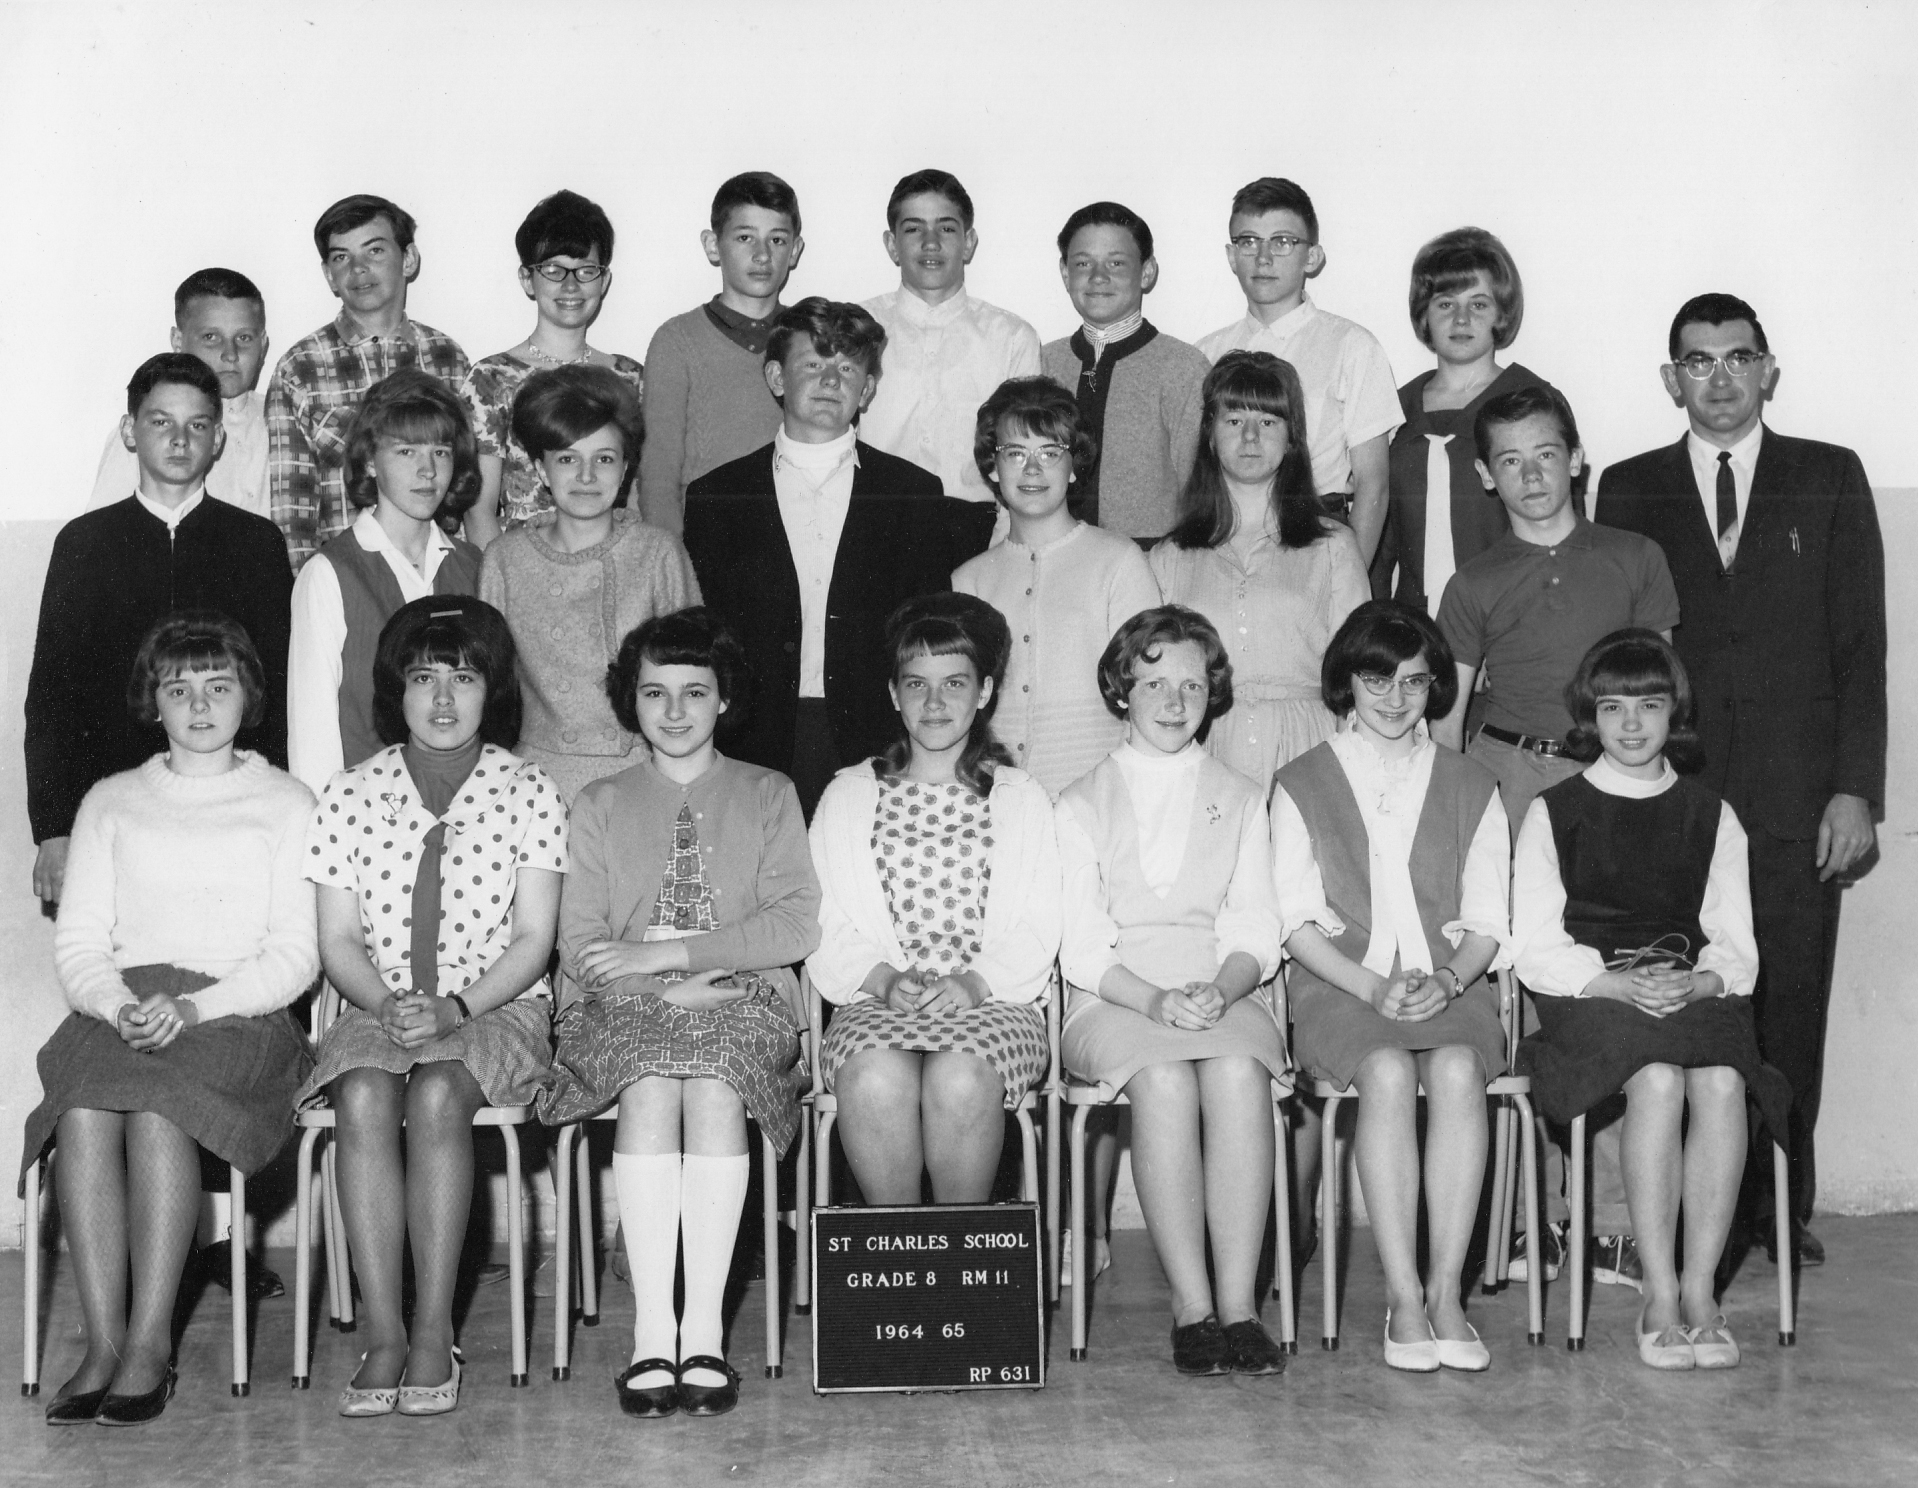 St. Charles School, Grade 8 1964-65 